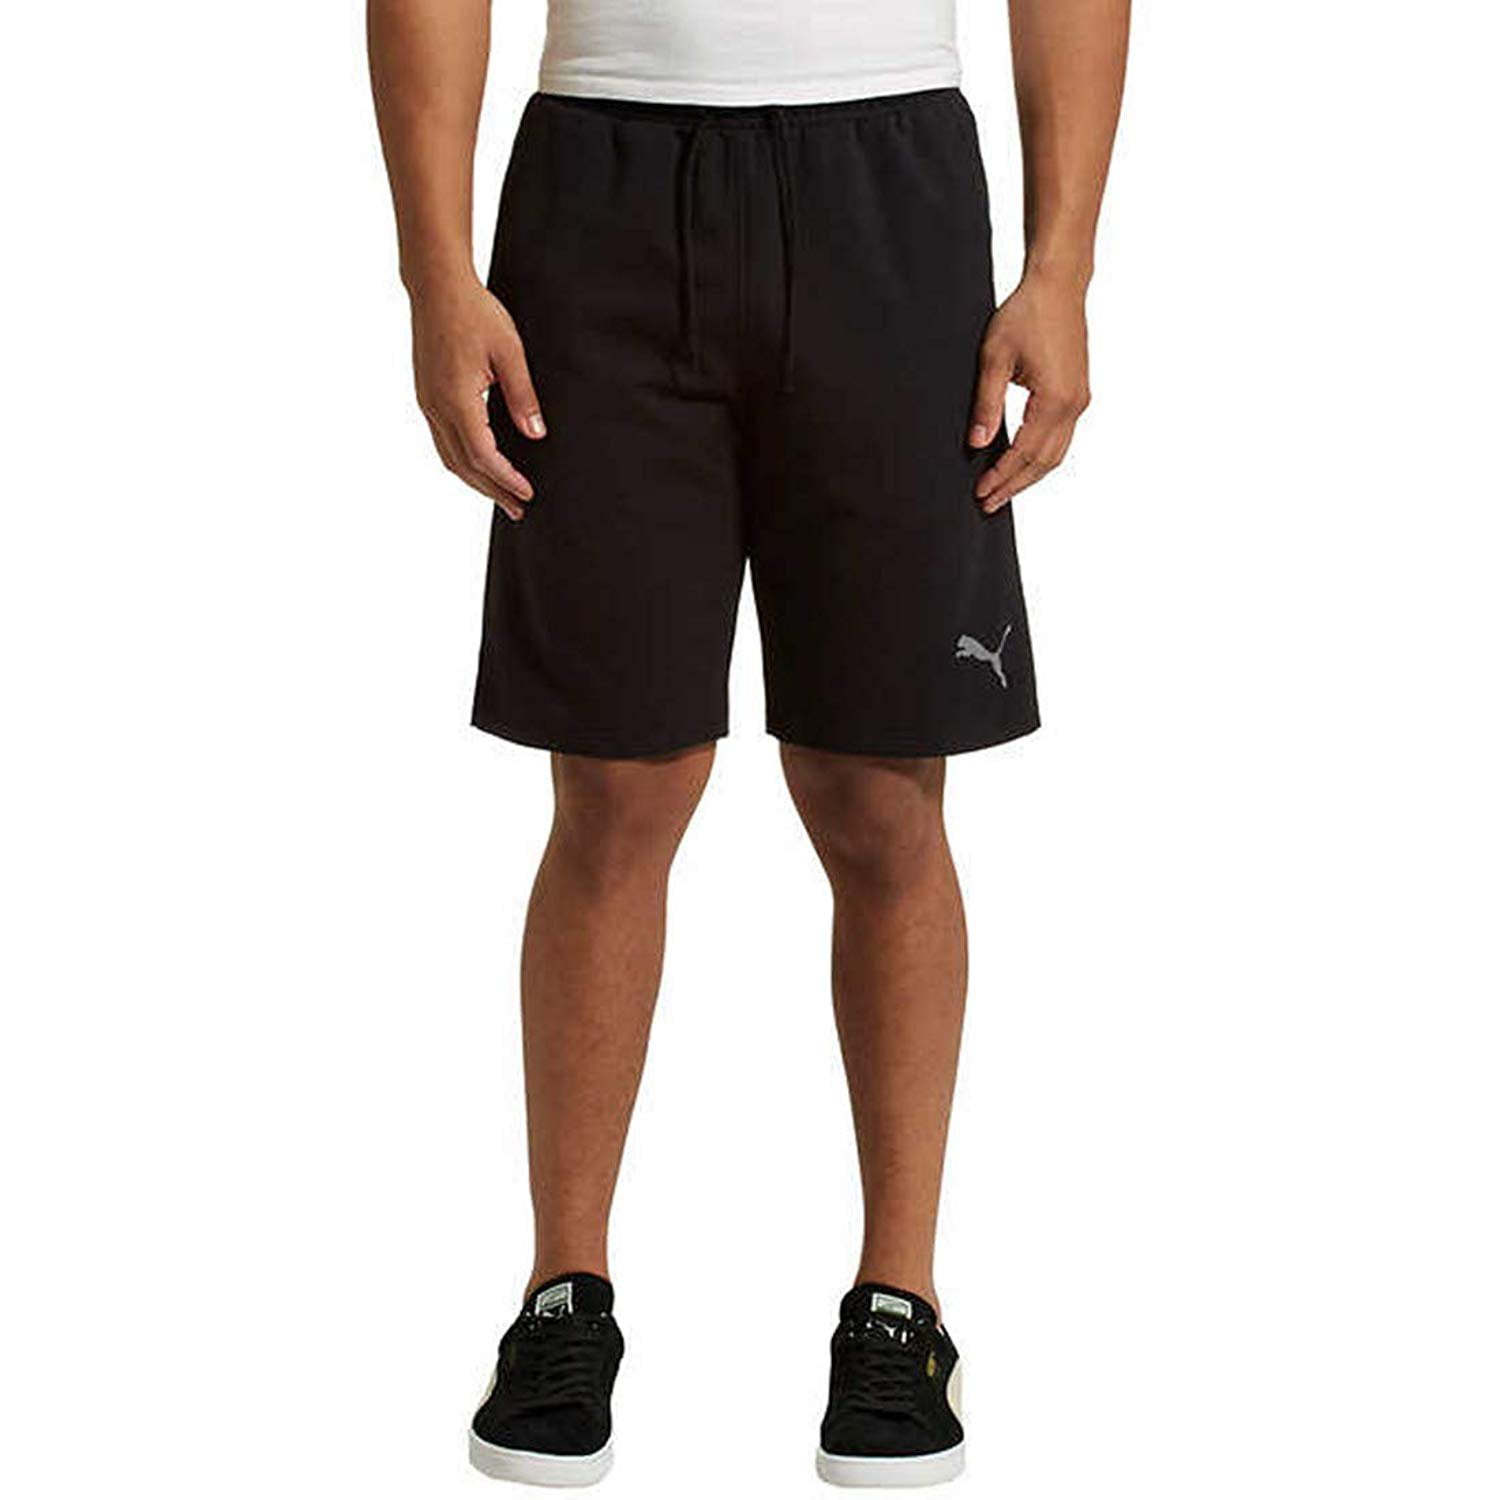 puma formstripe shorts